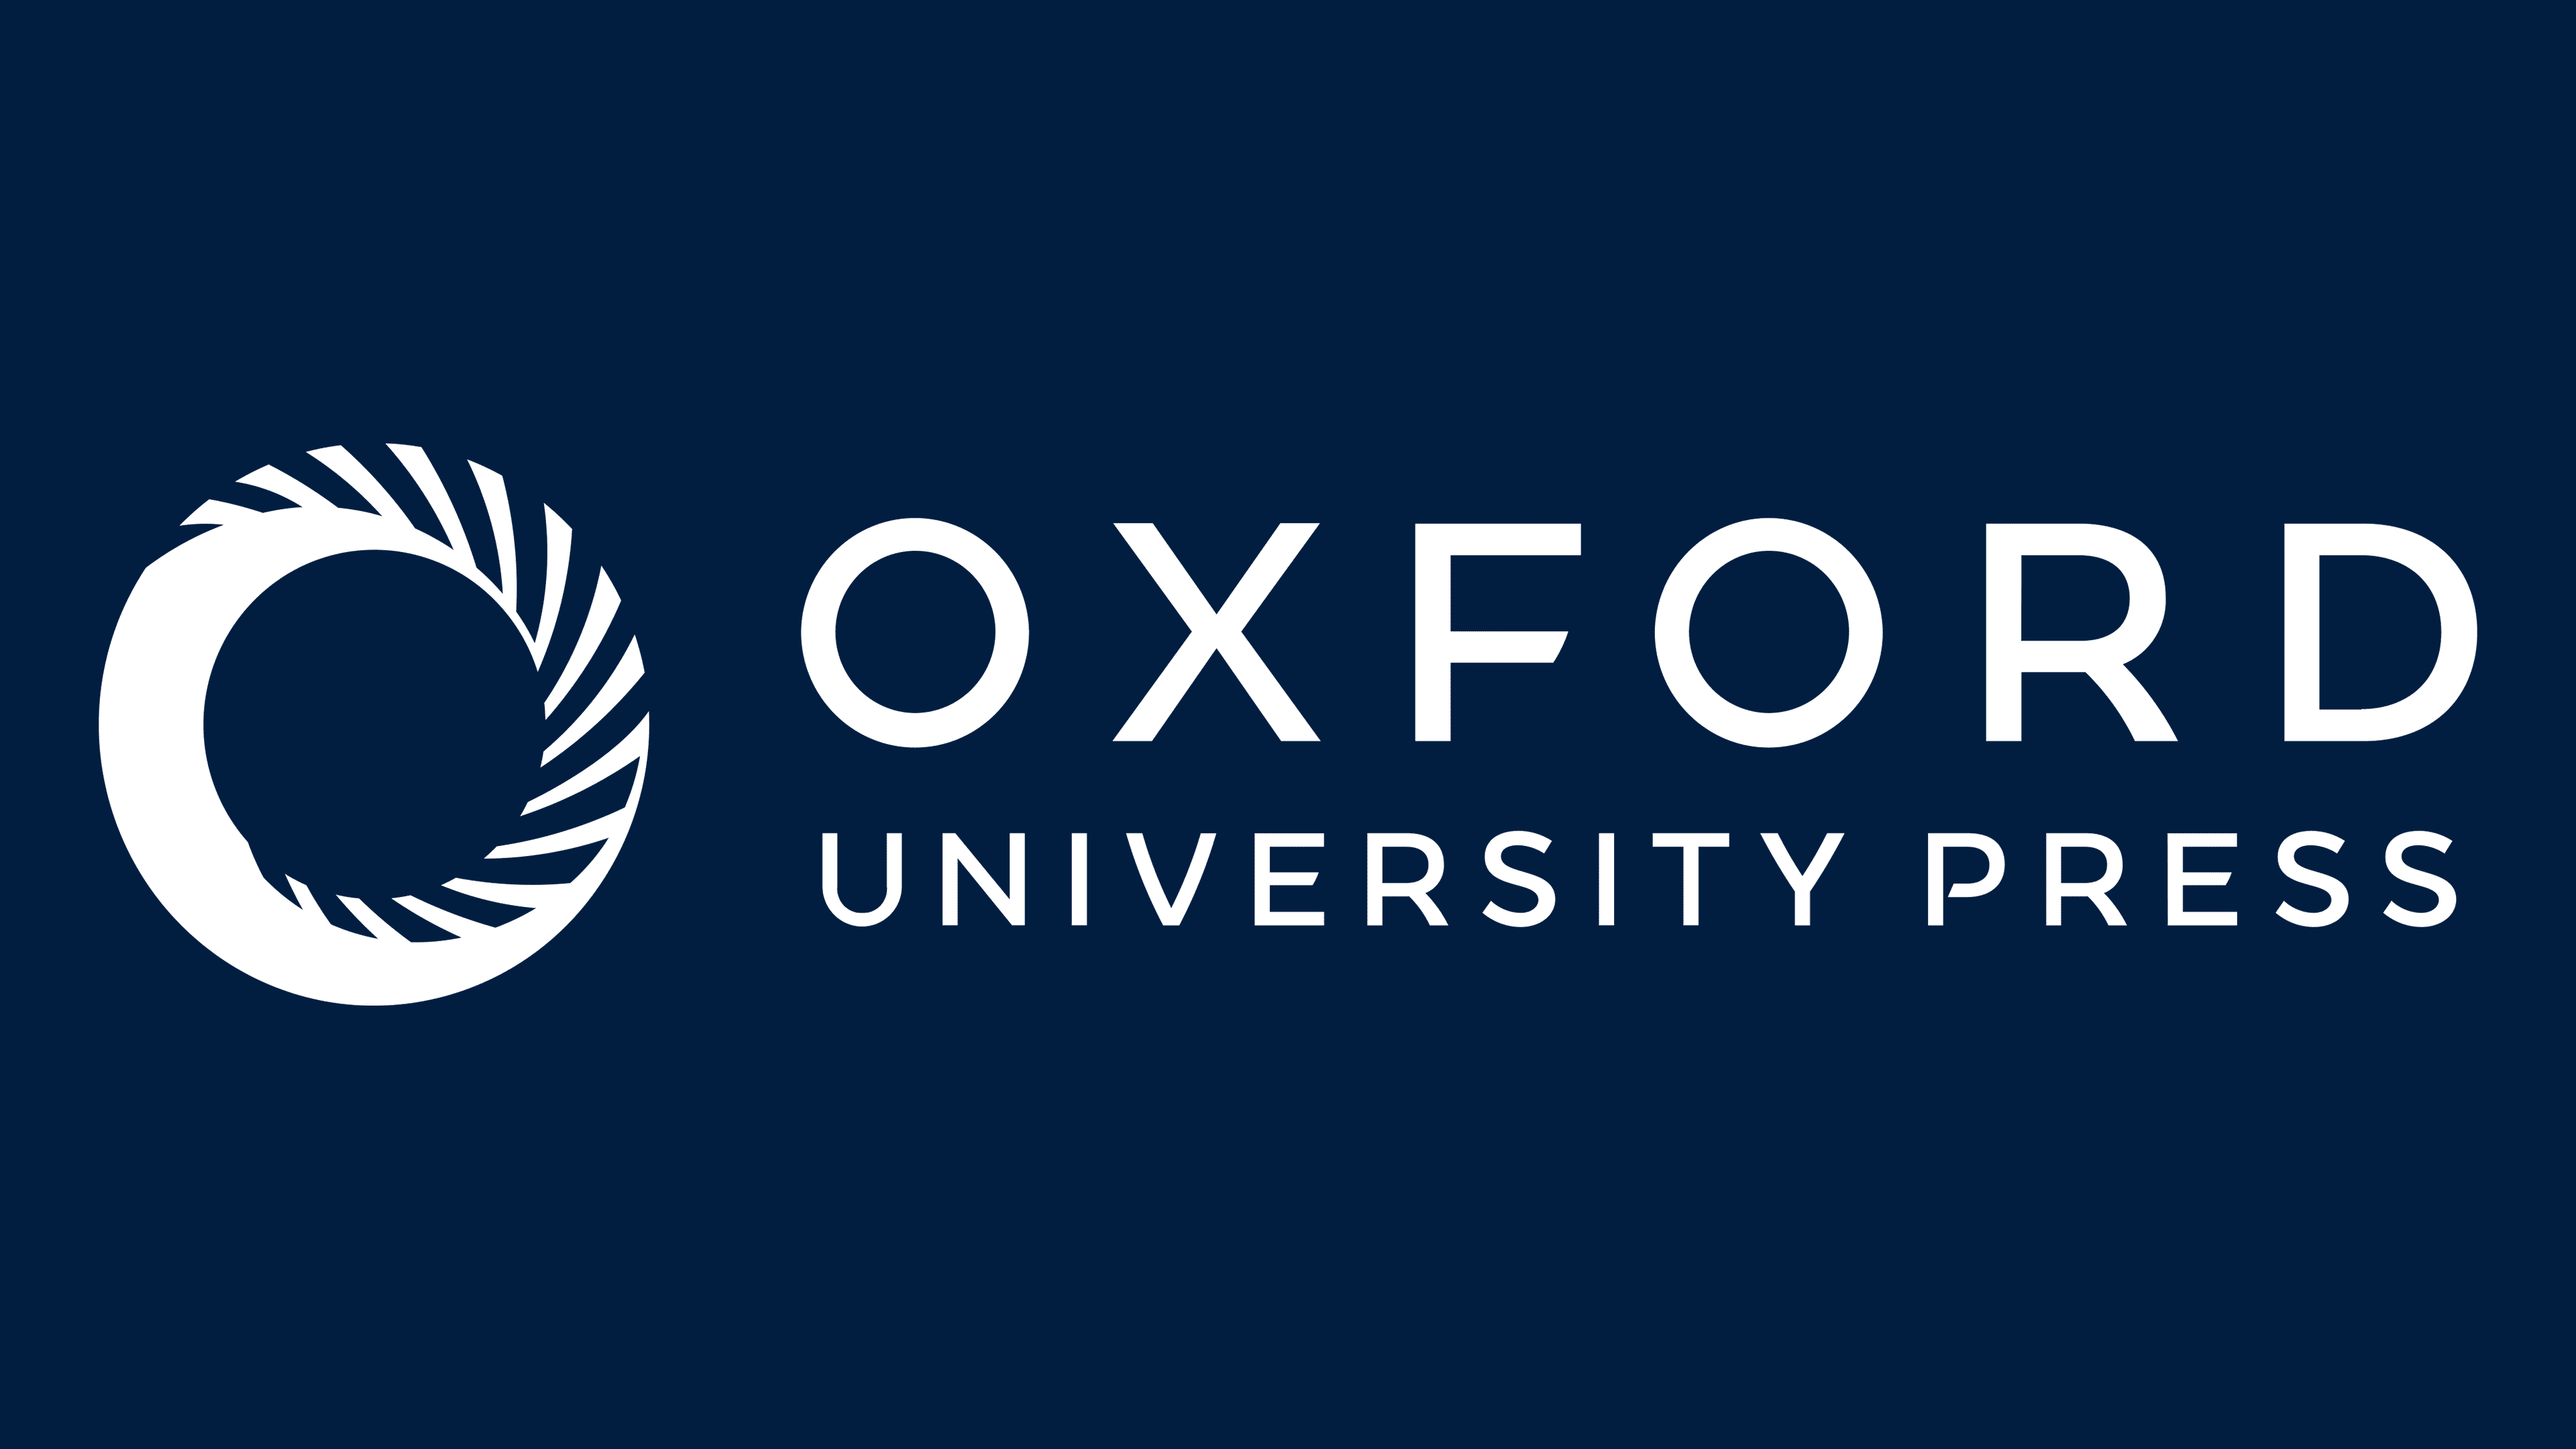 Oxford University Press - a modern style of an old establishment